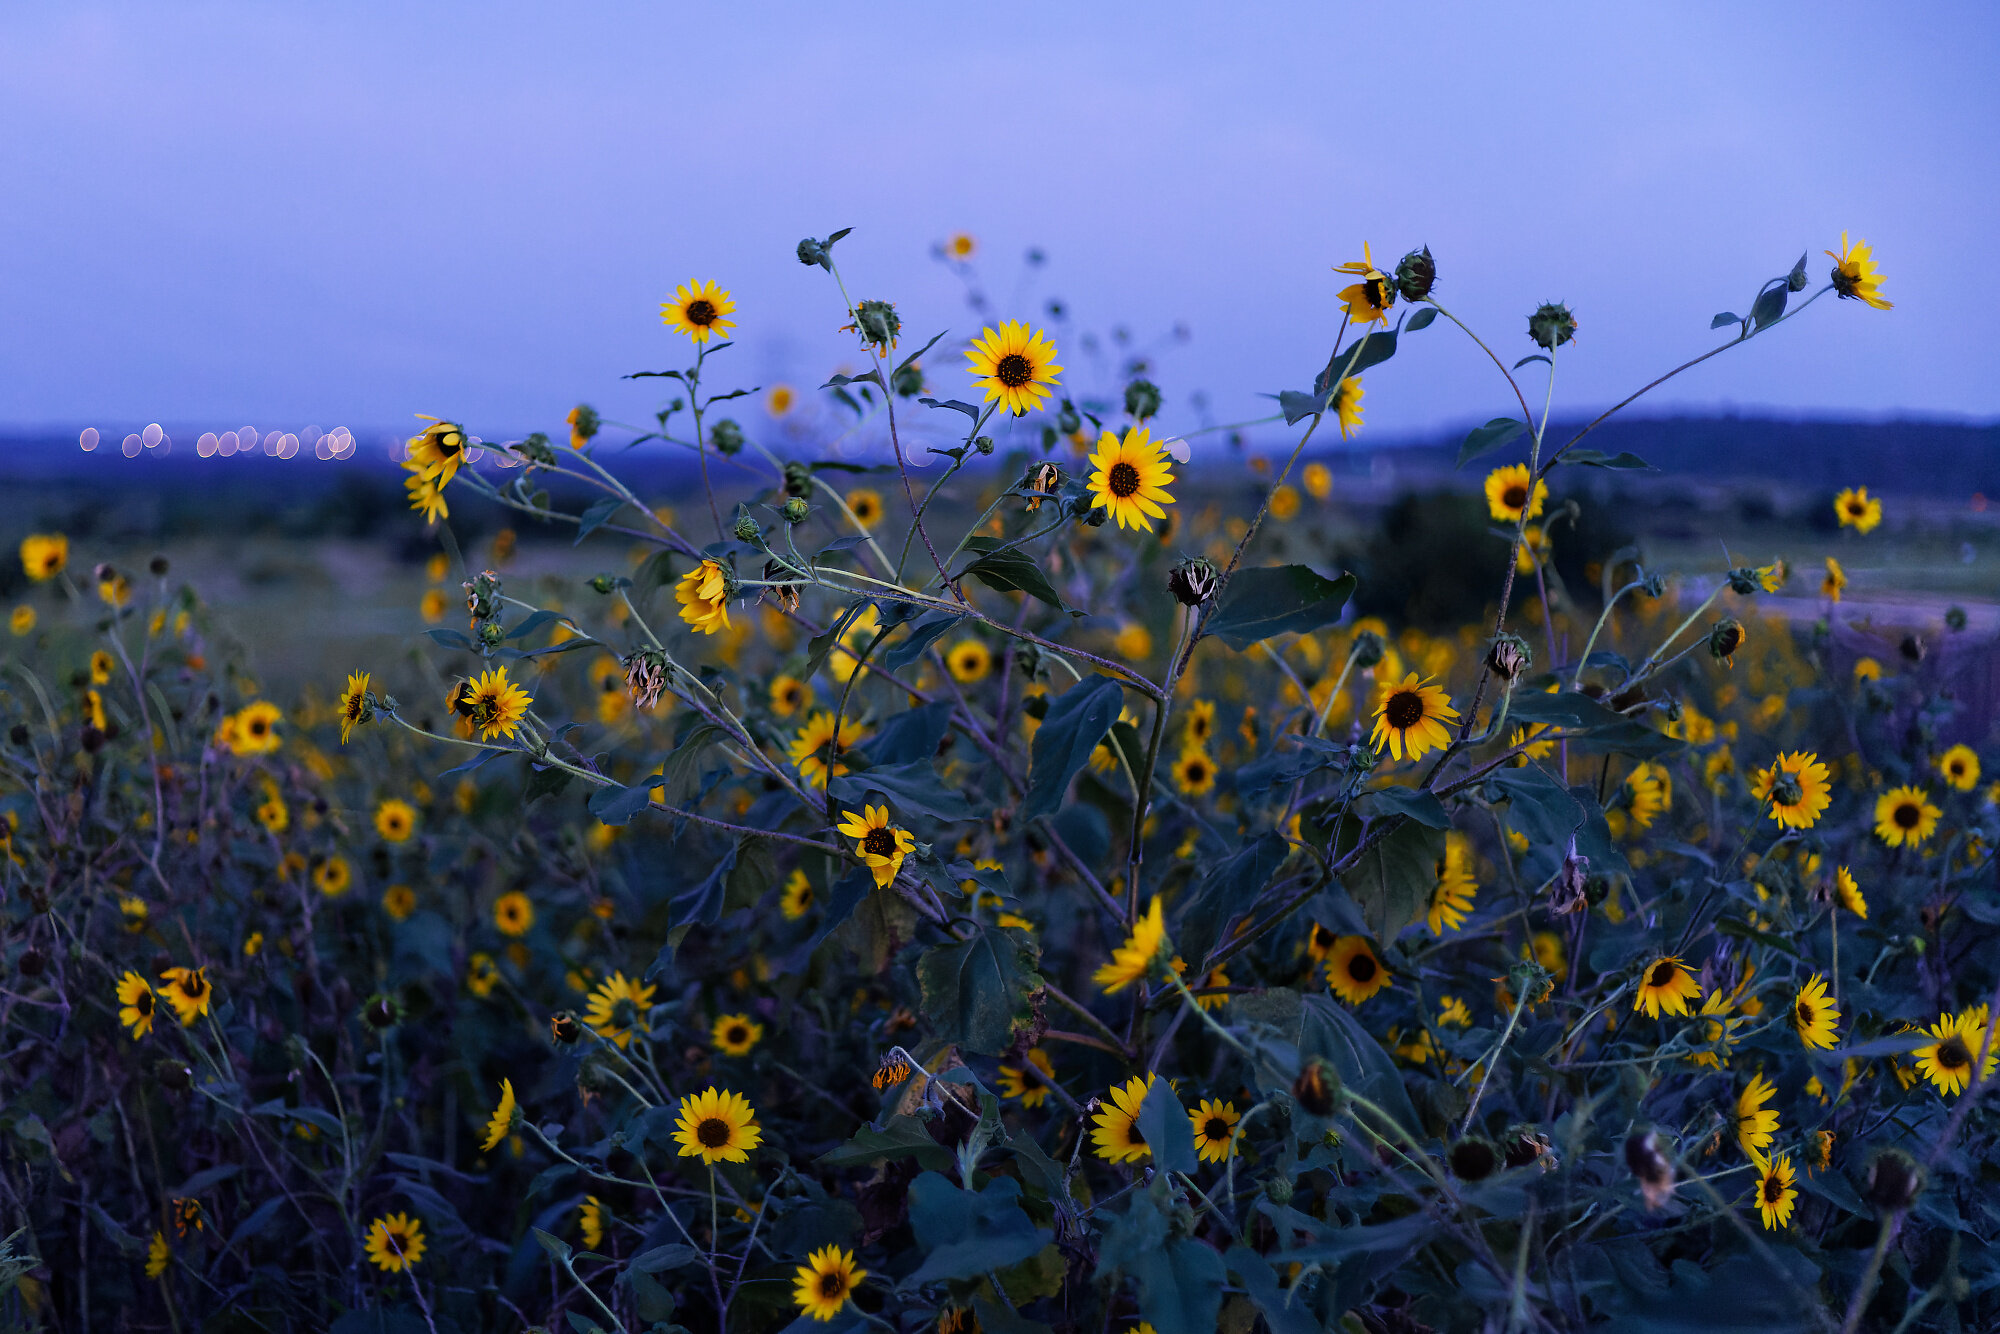 Wild Sunflowers at Twilight